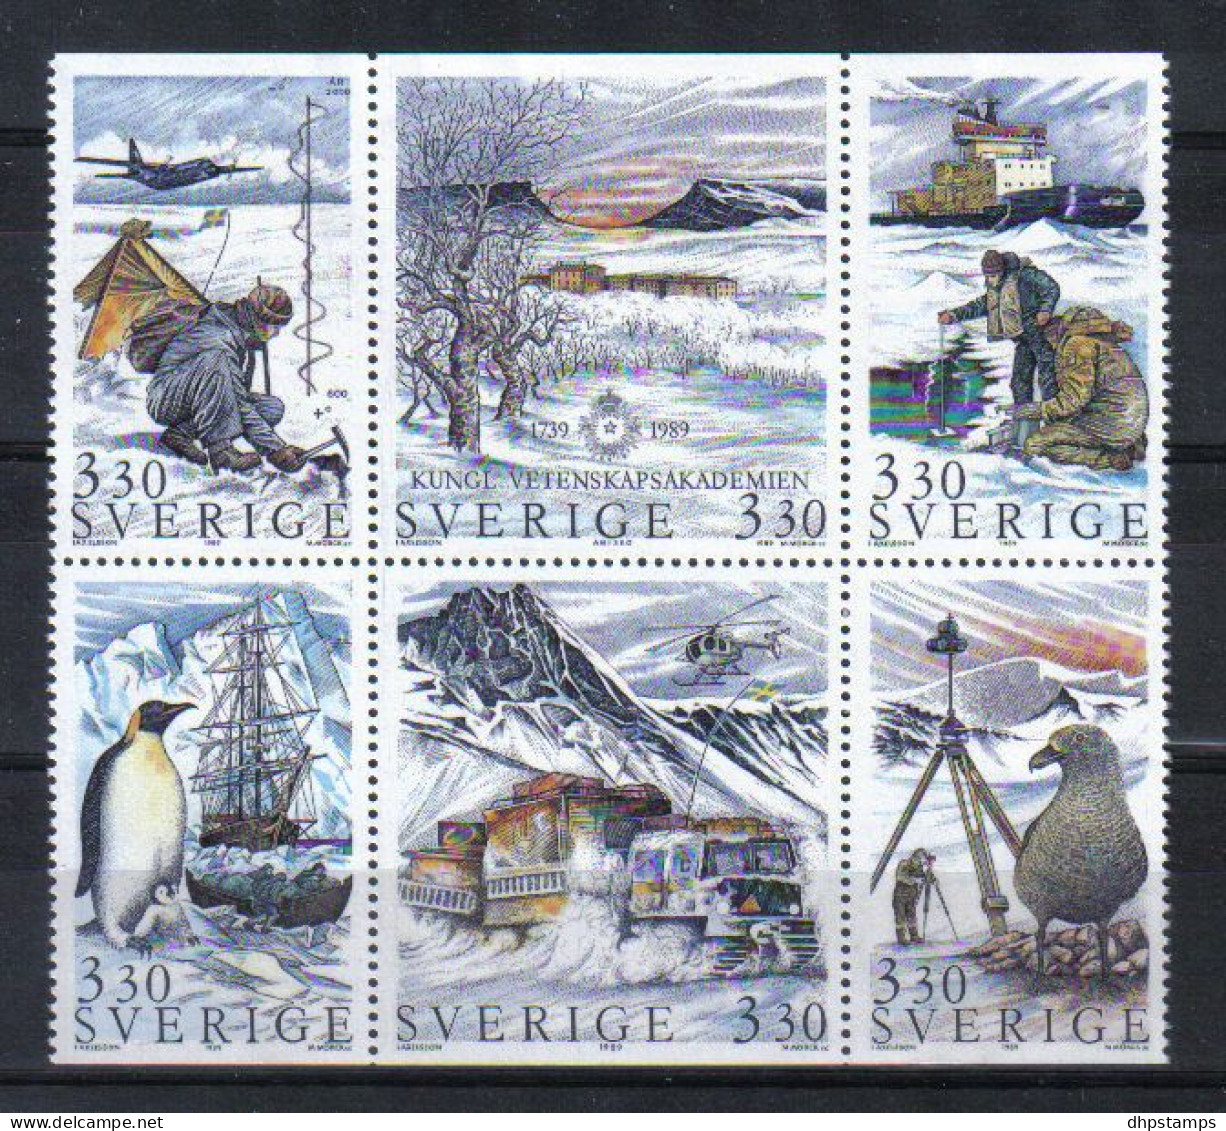 Sweden 1989 Polar Research 6-blok Y.T. 1535/1540 ** - Neufs